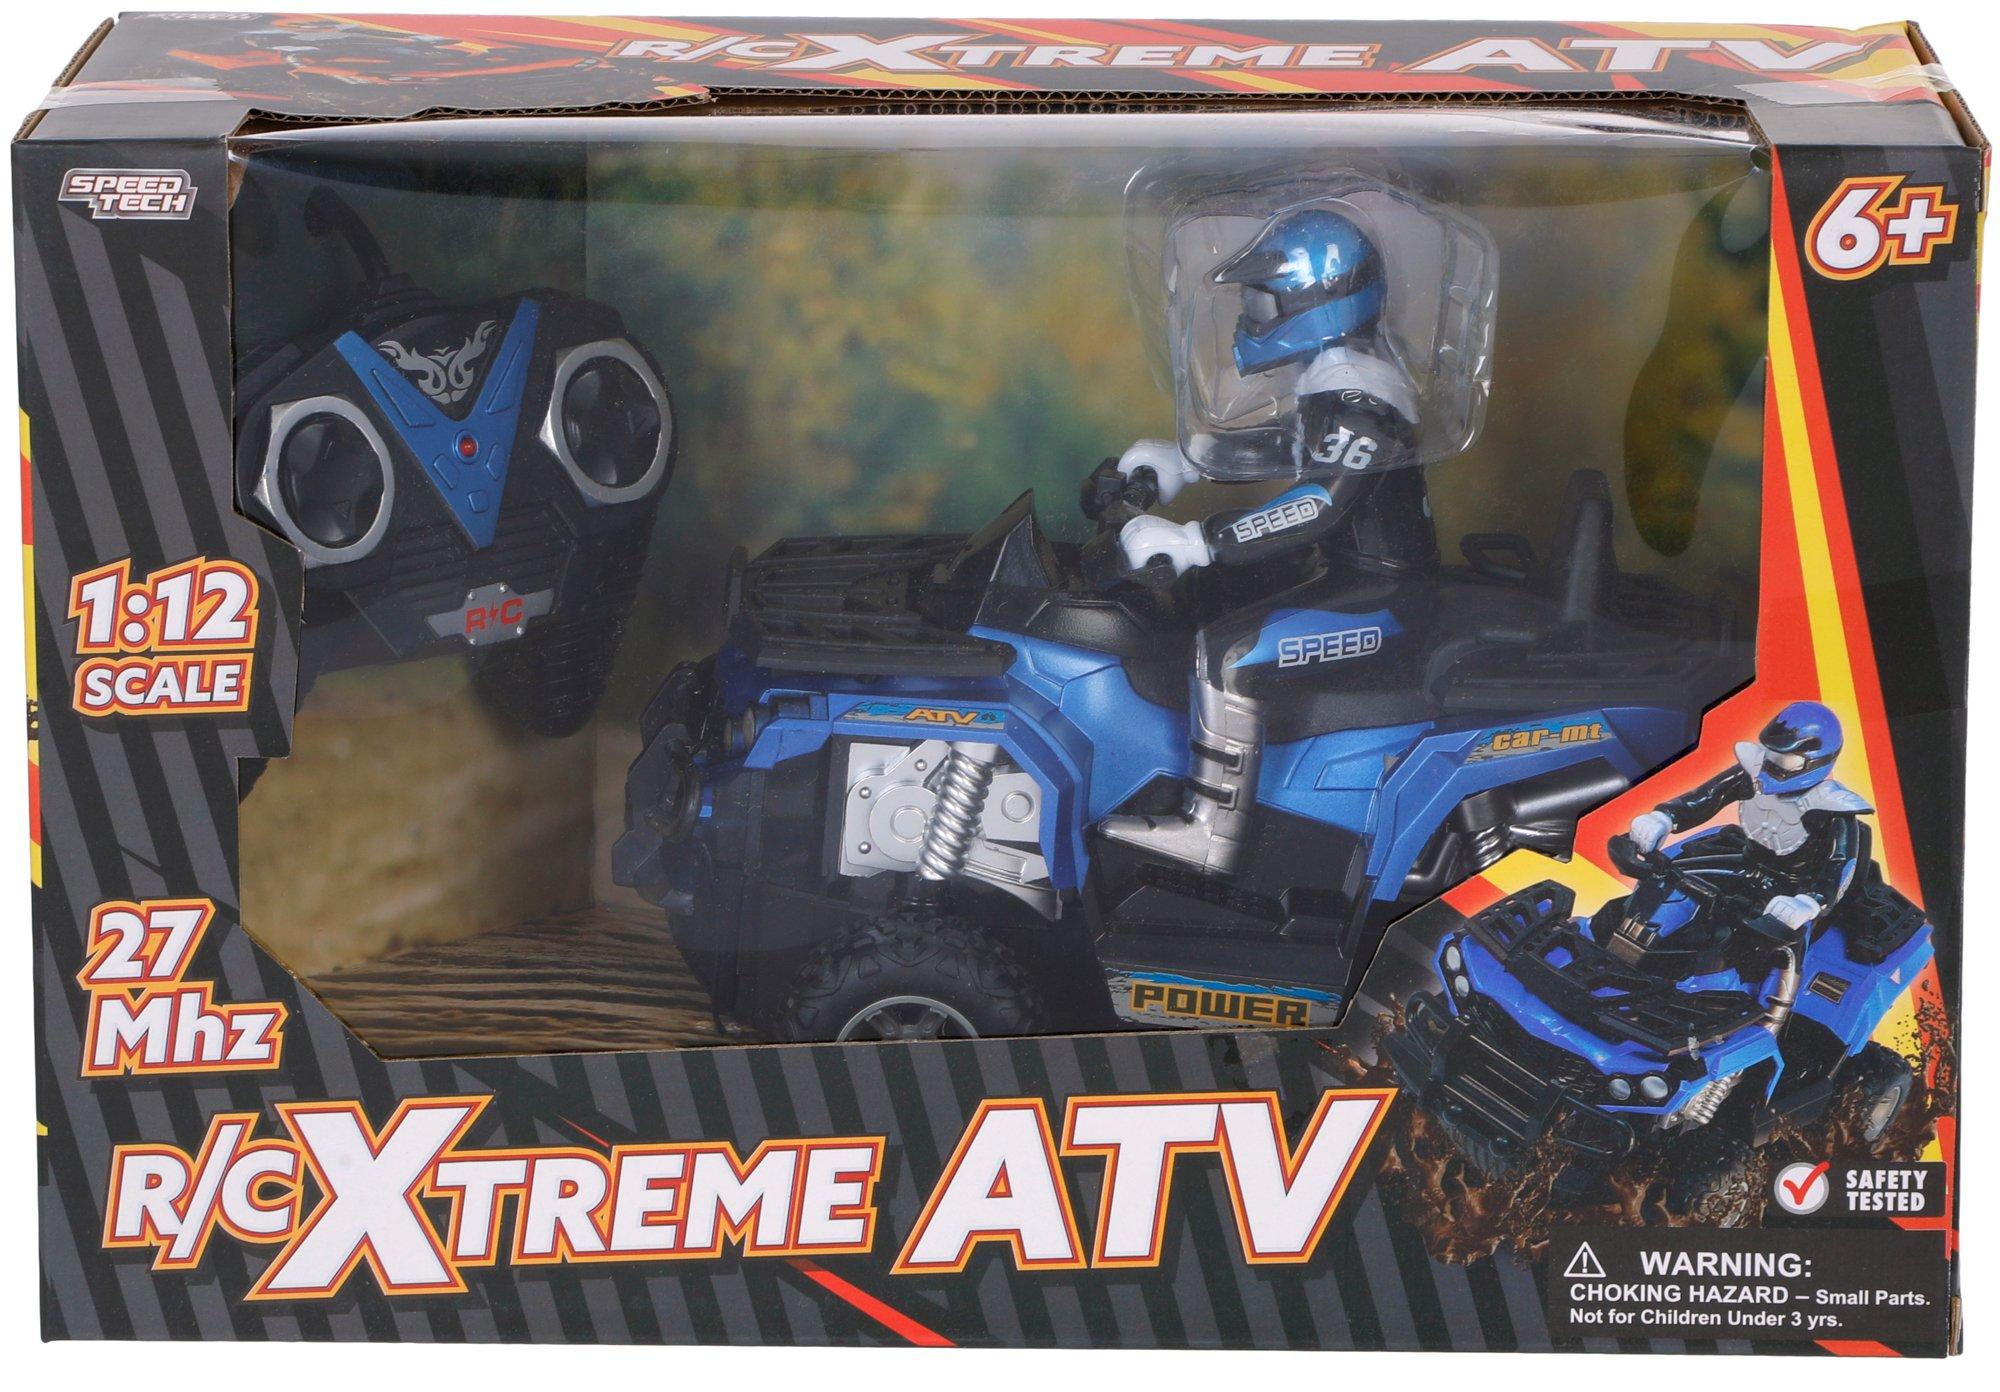 Kids  R/C Xtreme ATV Play Set